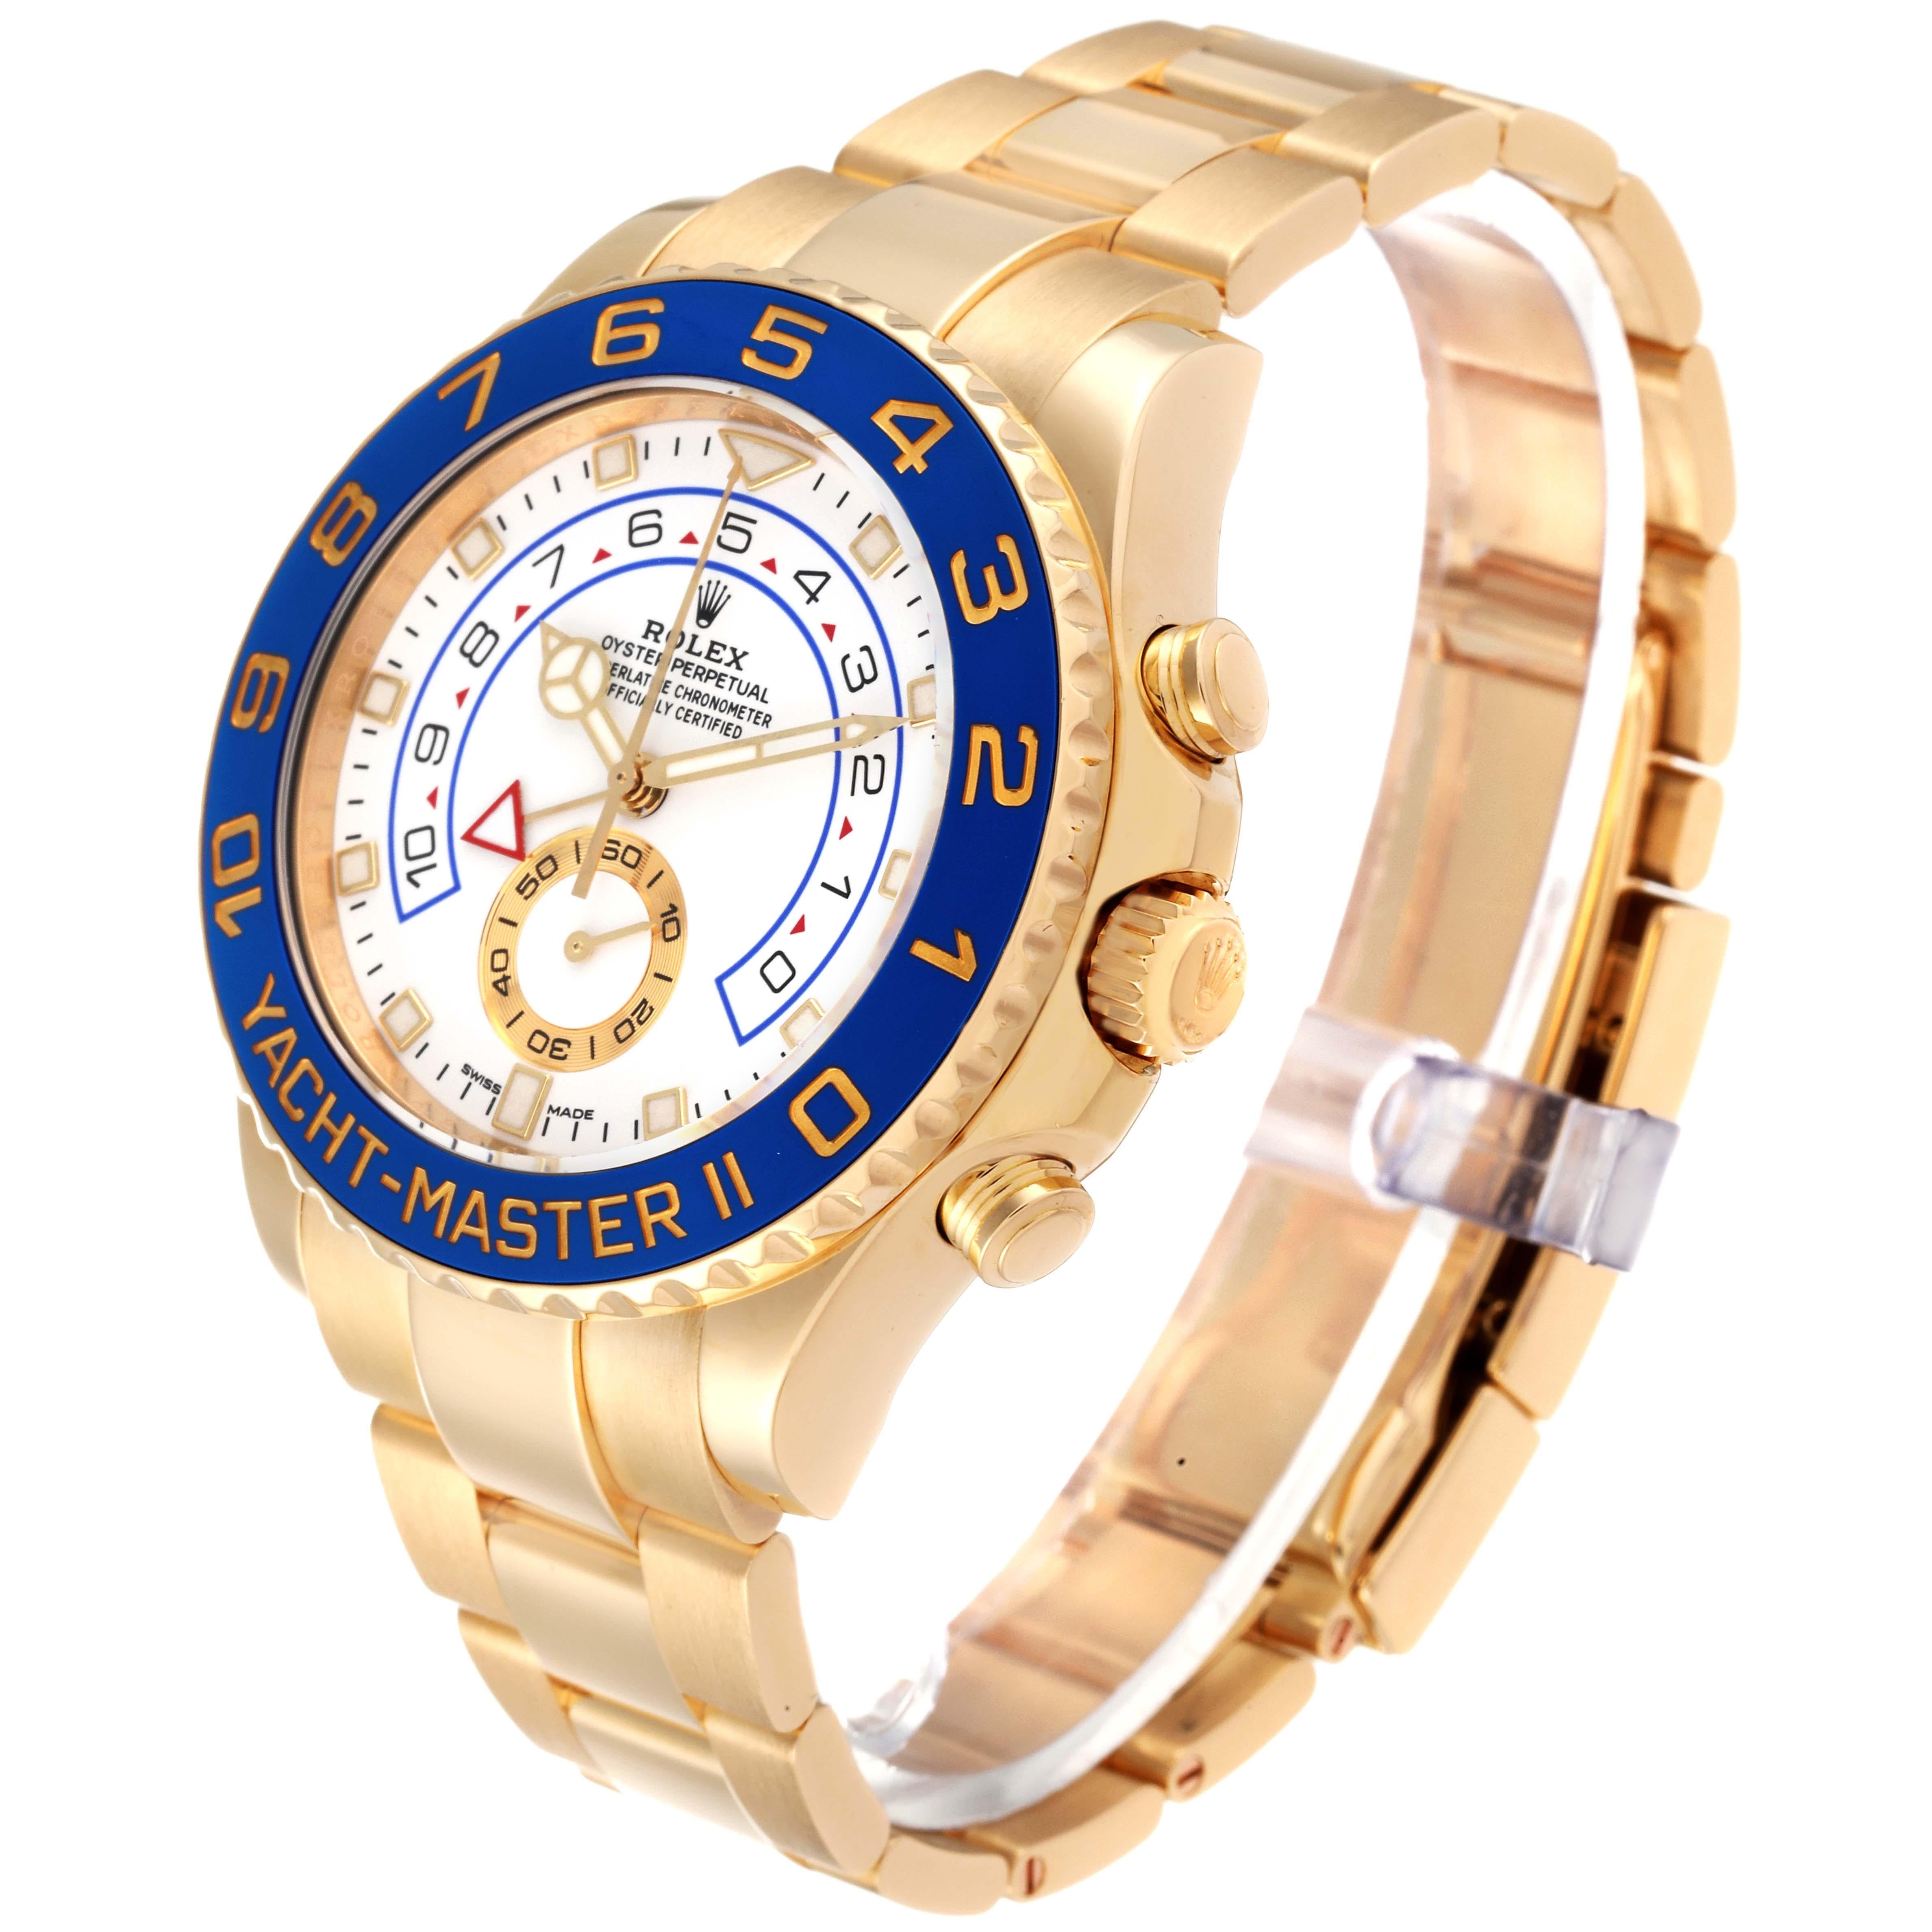 Rolex Yachtmaster II Regatta Chronograph Yellow Gold Men's Watch 116688 Box Card For Sale 1